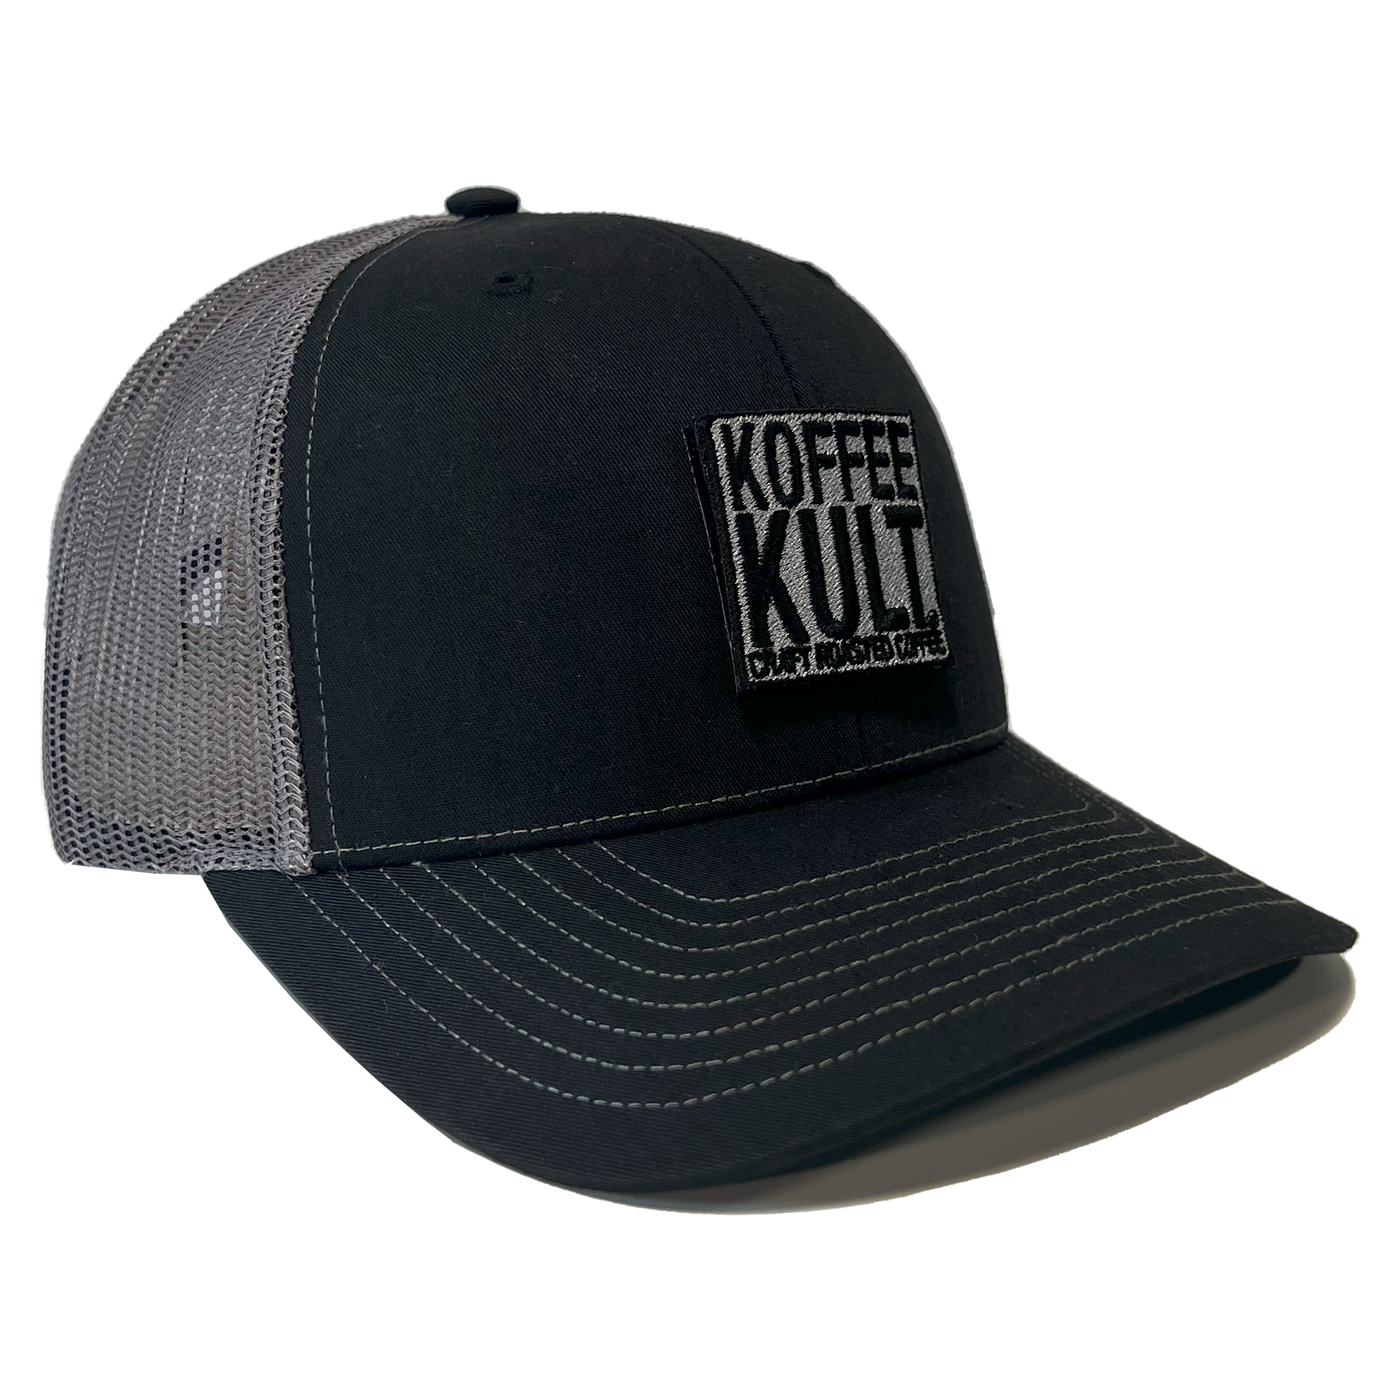 Koffee Kult Trucker Hat